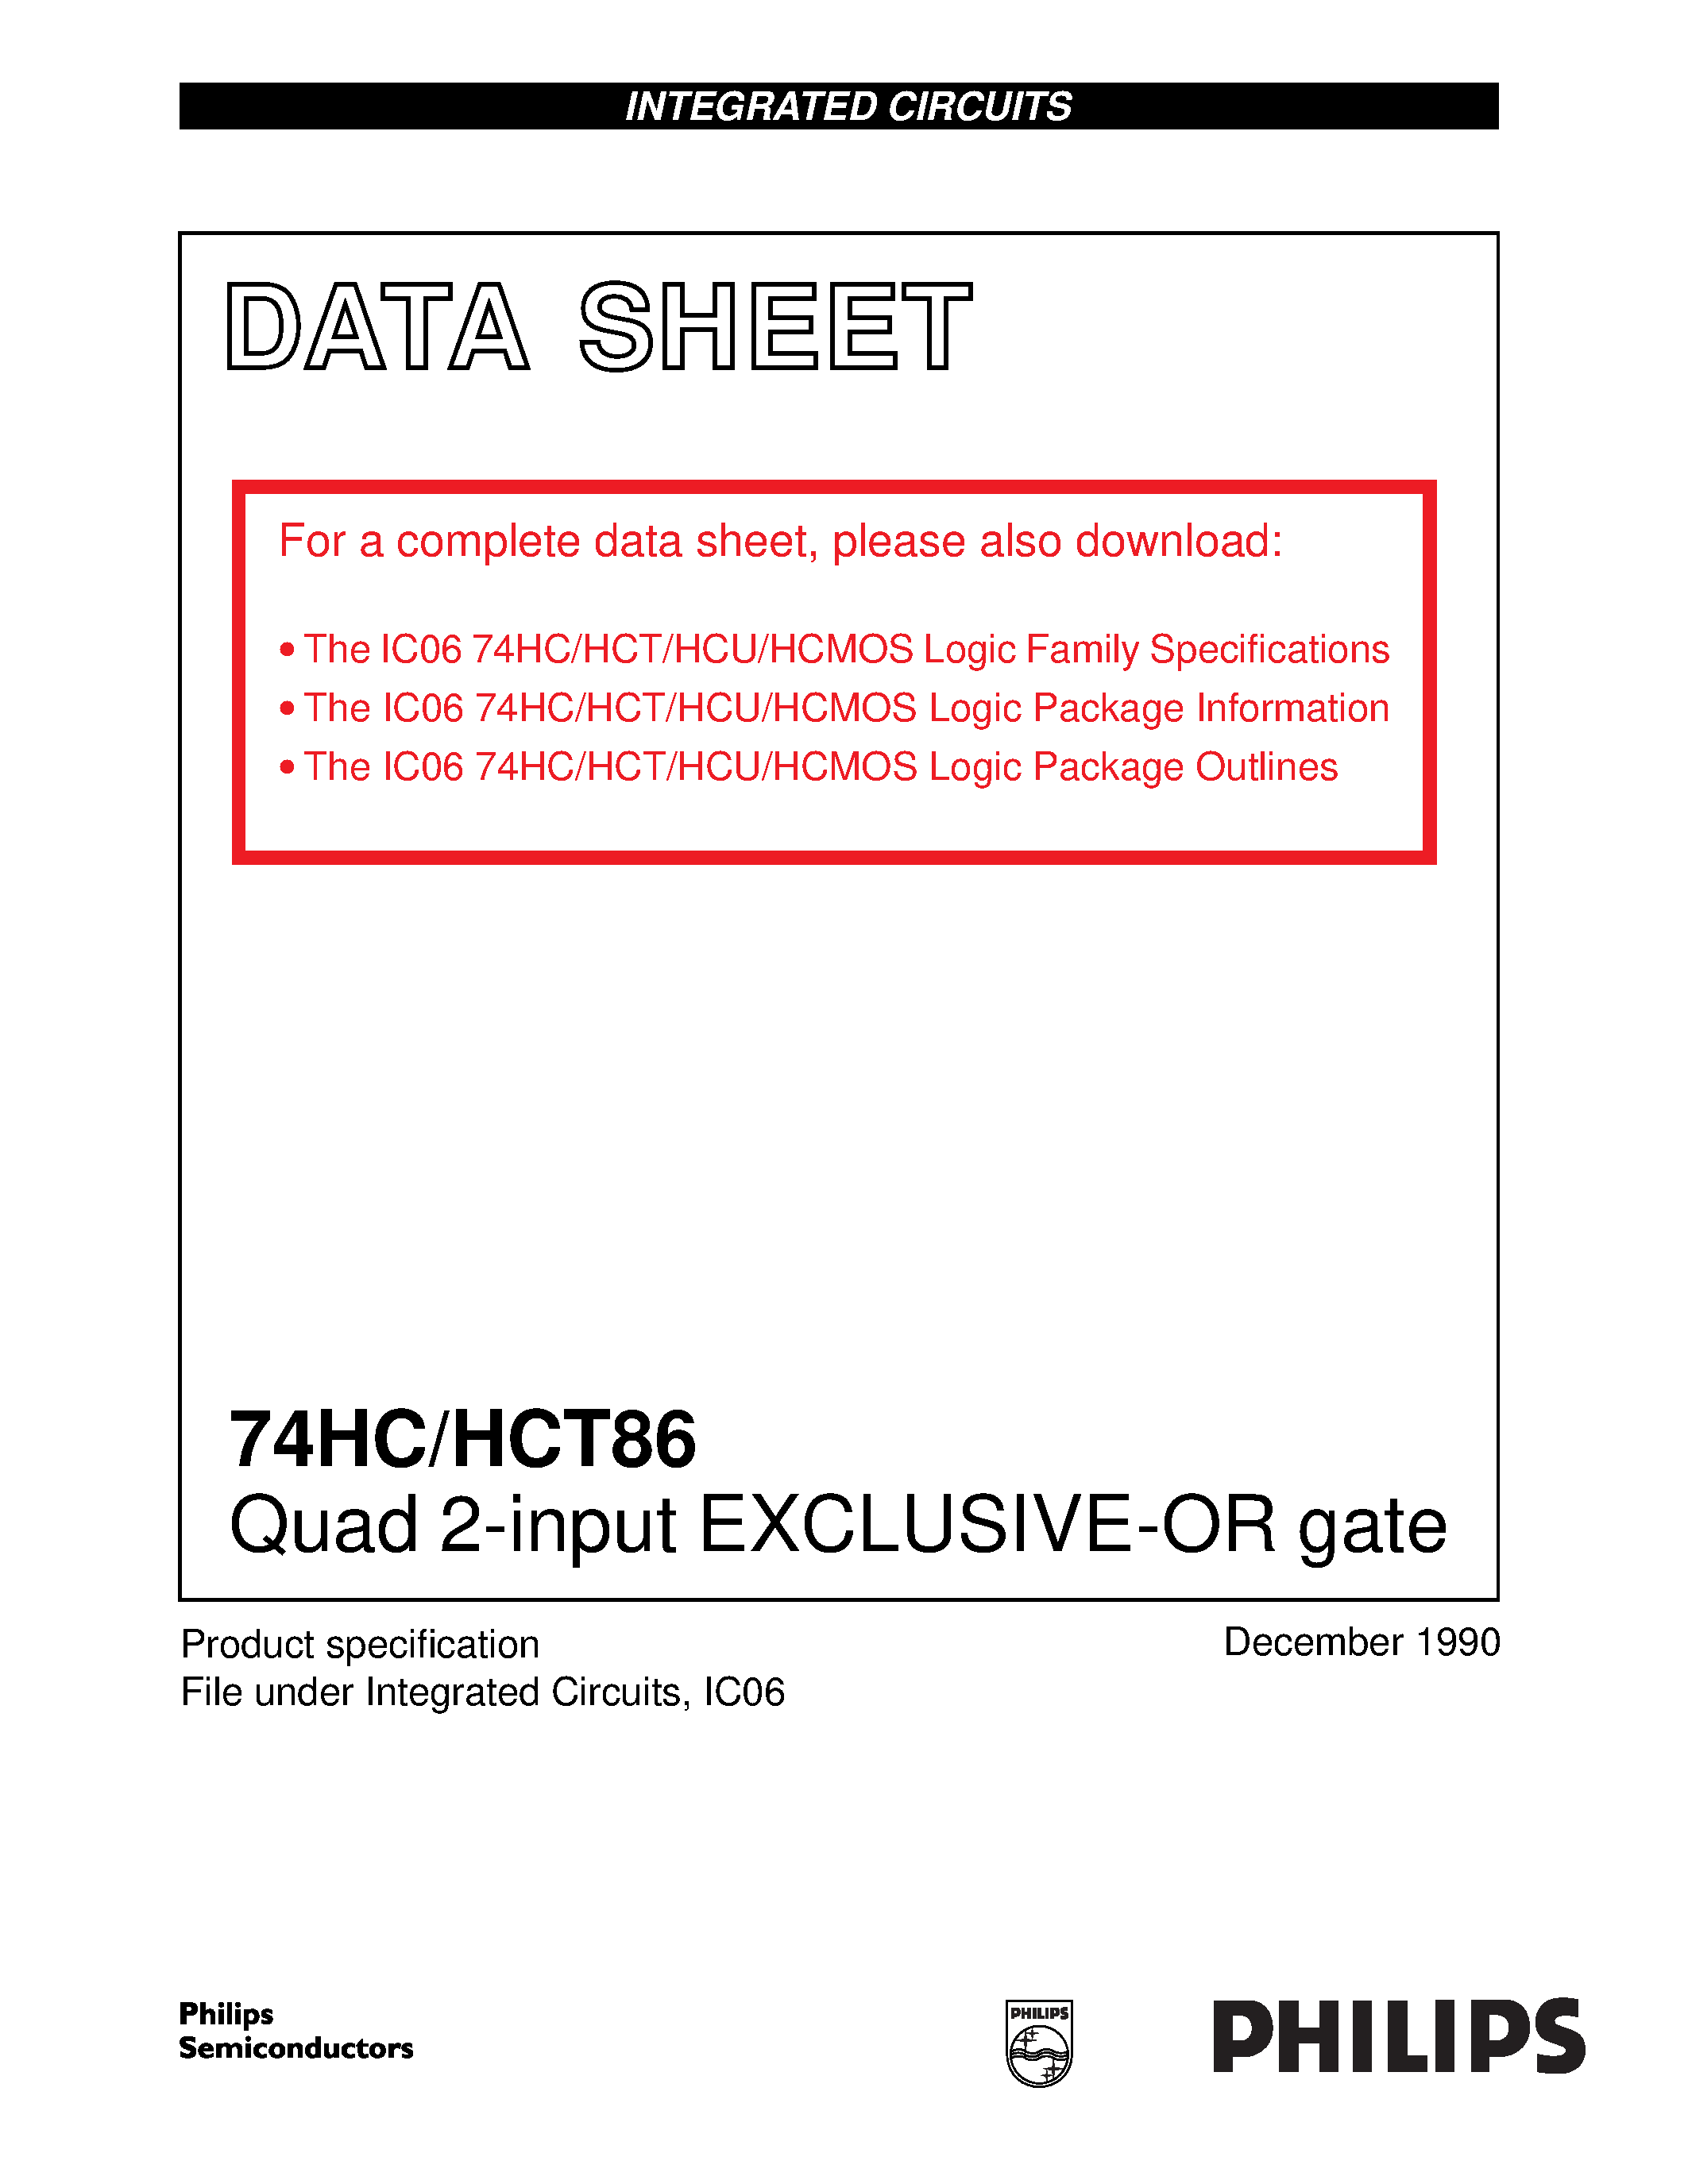 Даташит 74HCT86 - Quad 2-input EXCLUSIVE-OR gate страница 1